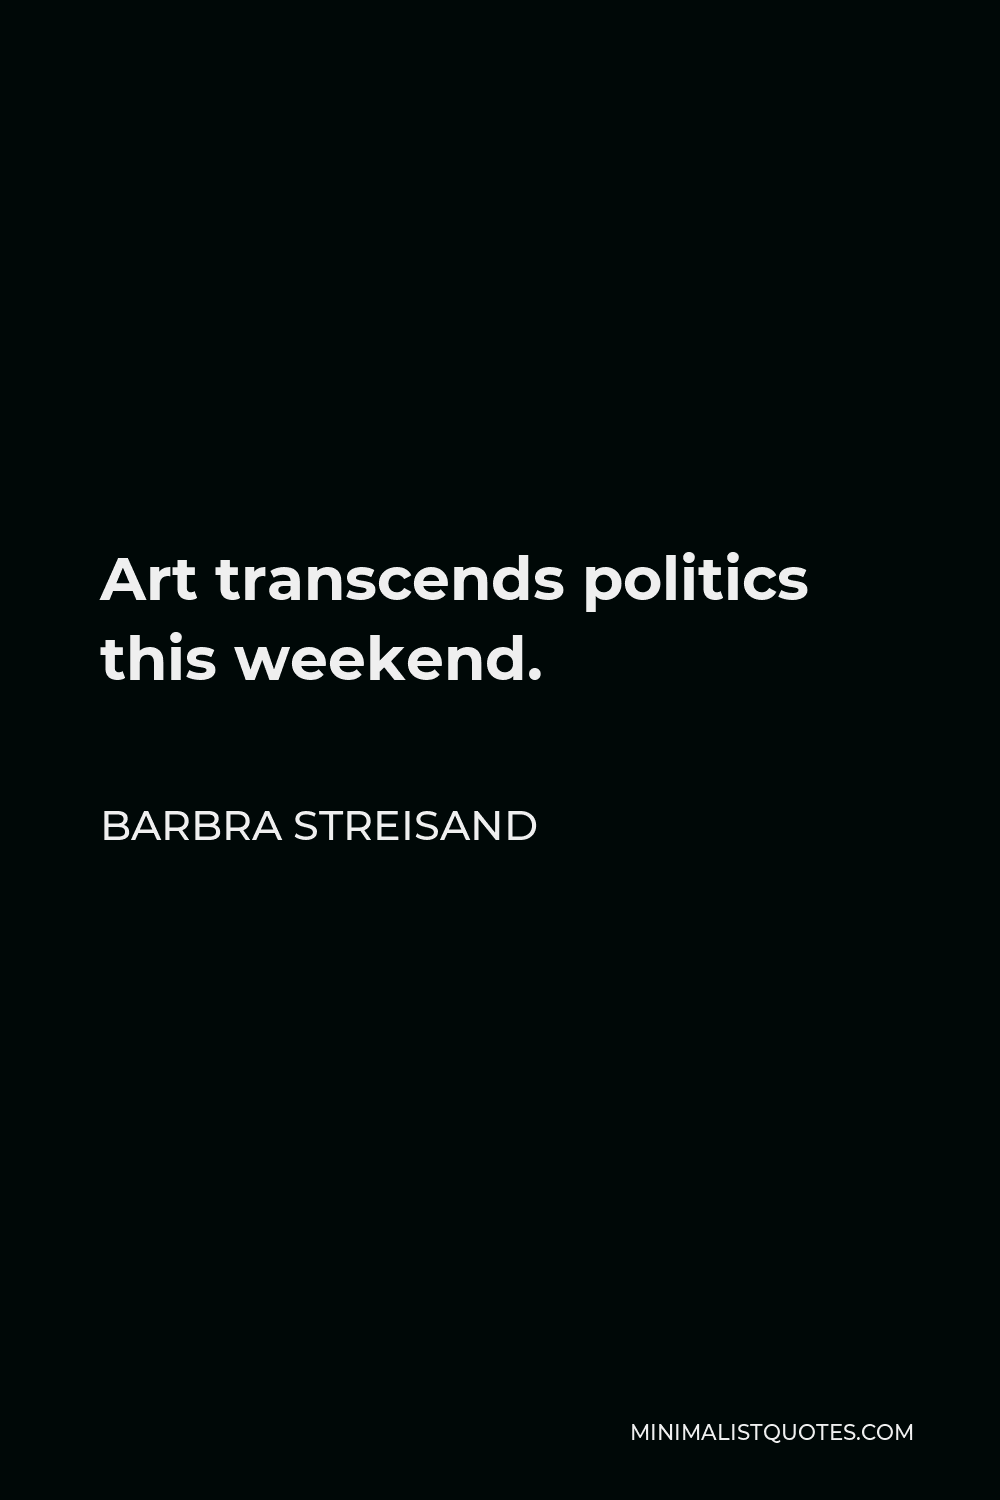 Barbra Streisand Quote - Art transcends politics this weekend.